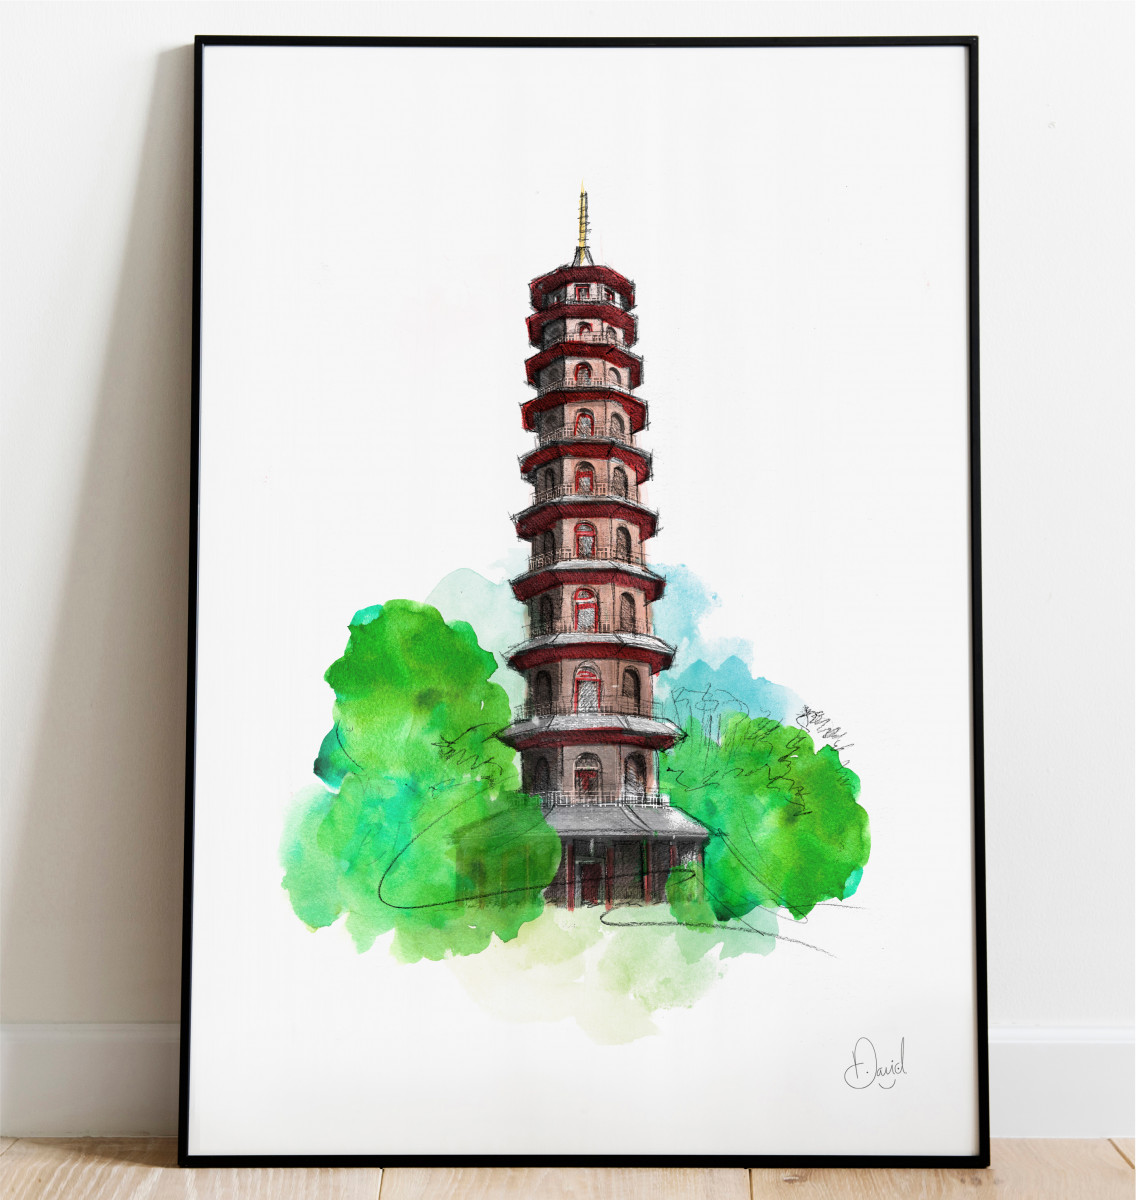 London - Kew Gardens, The Great Pagoda art print